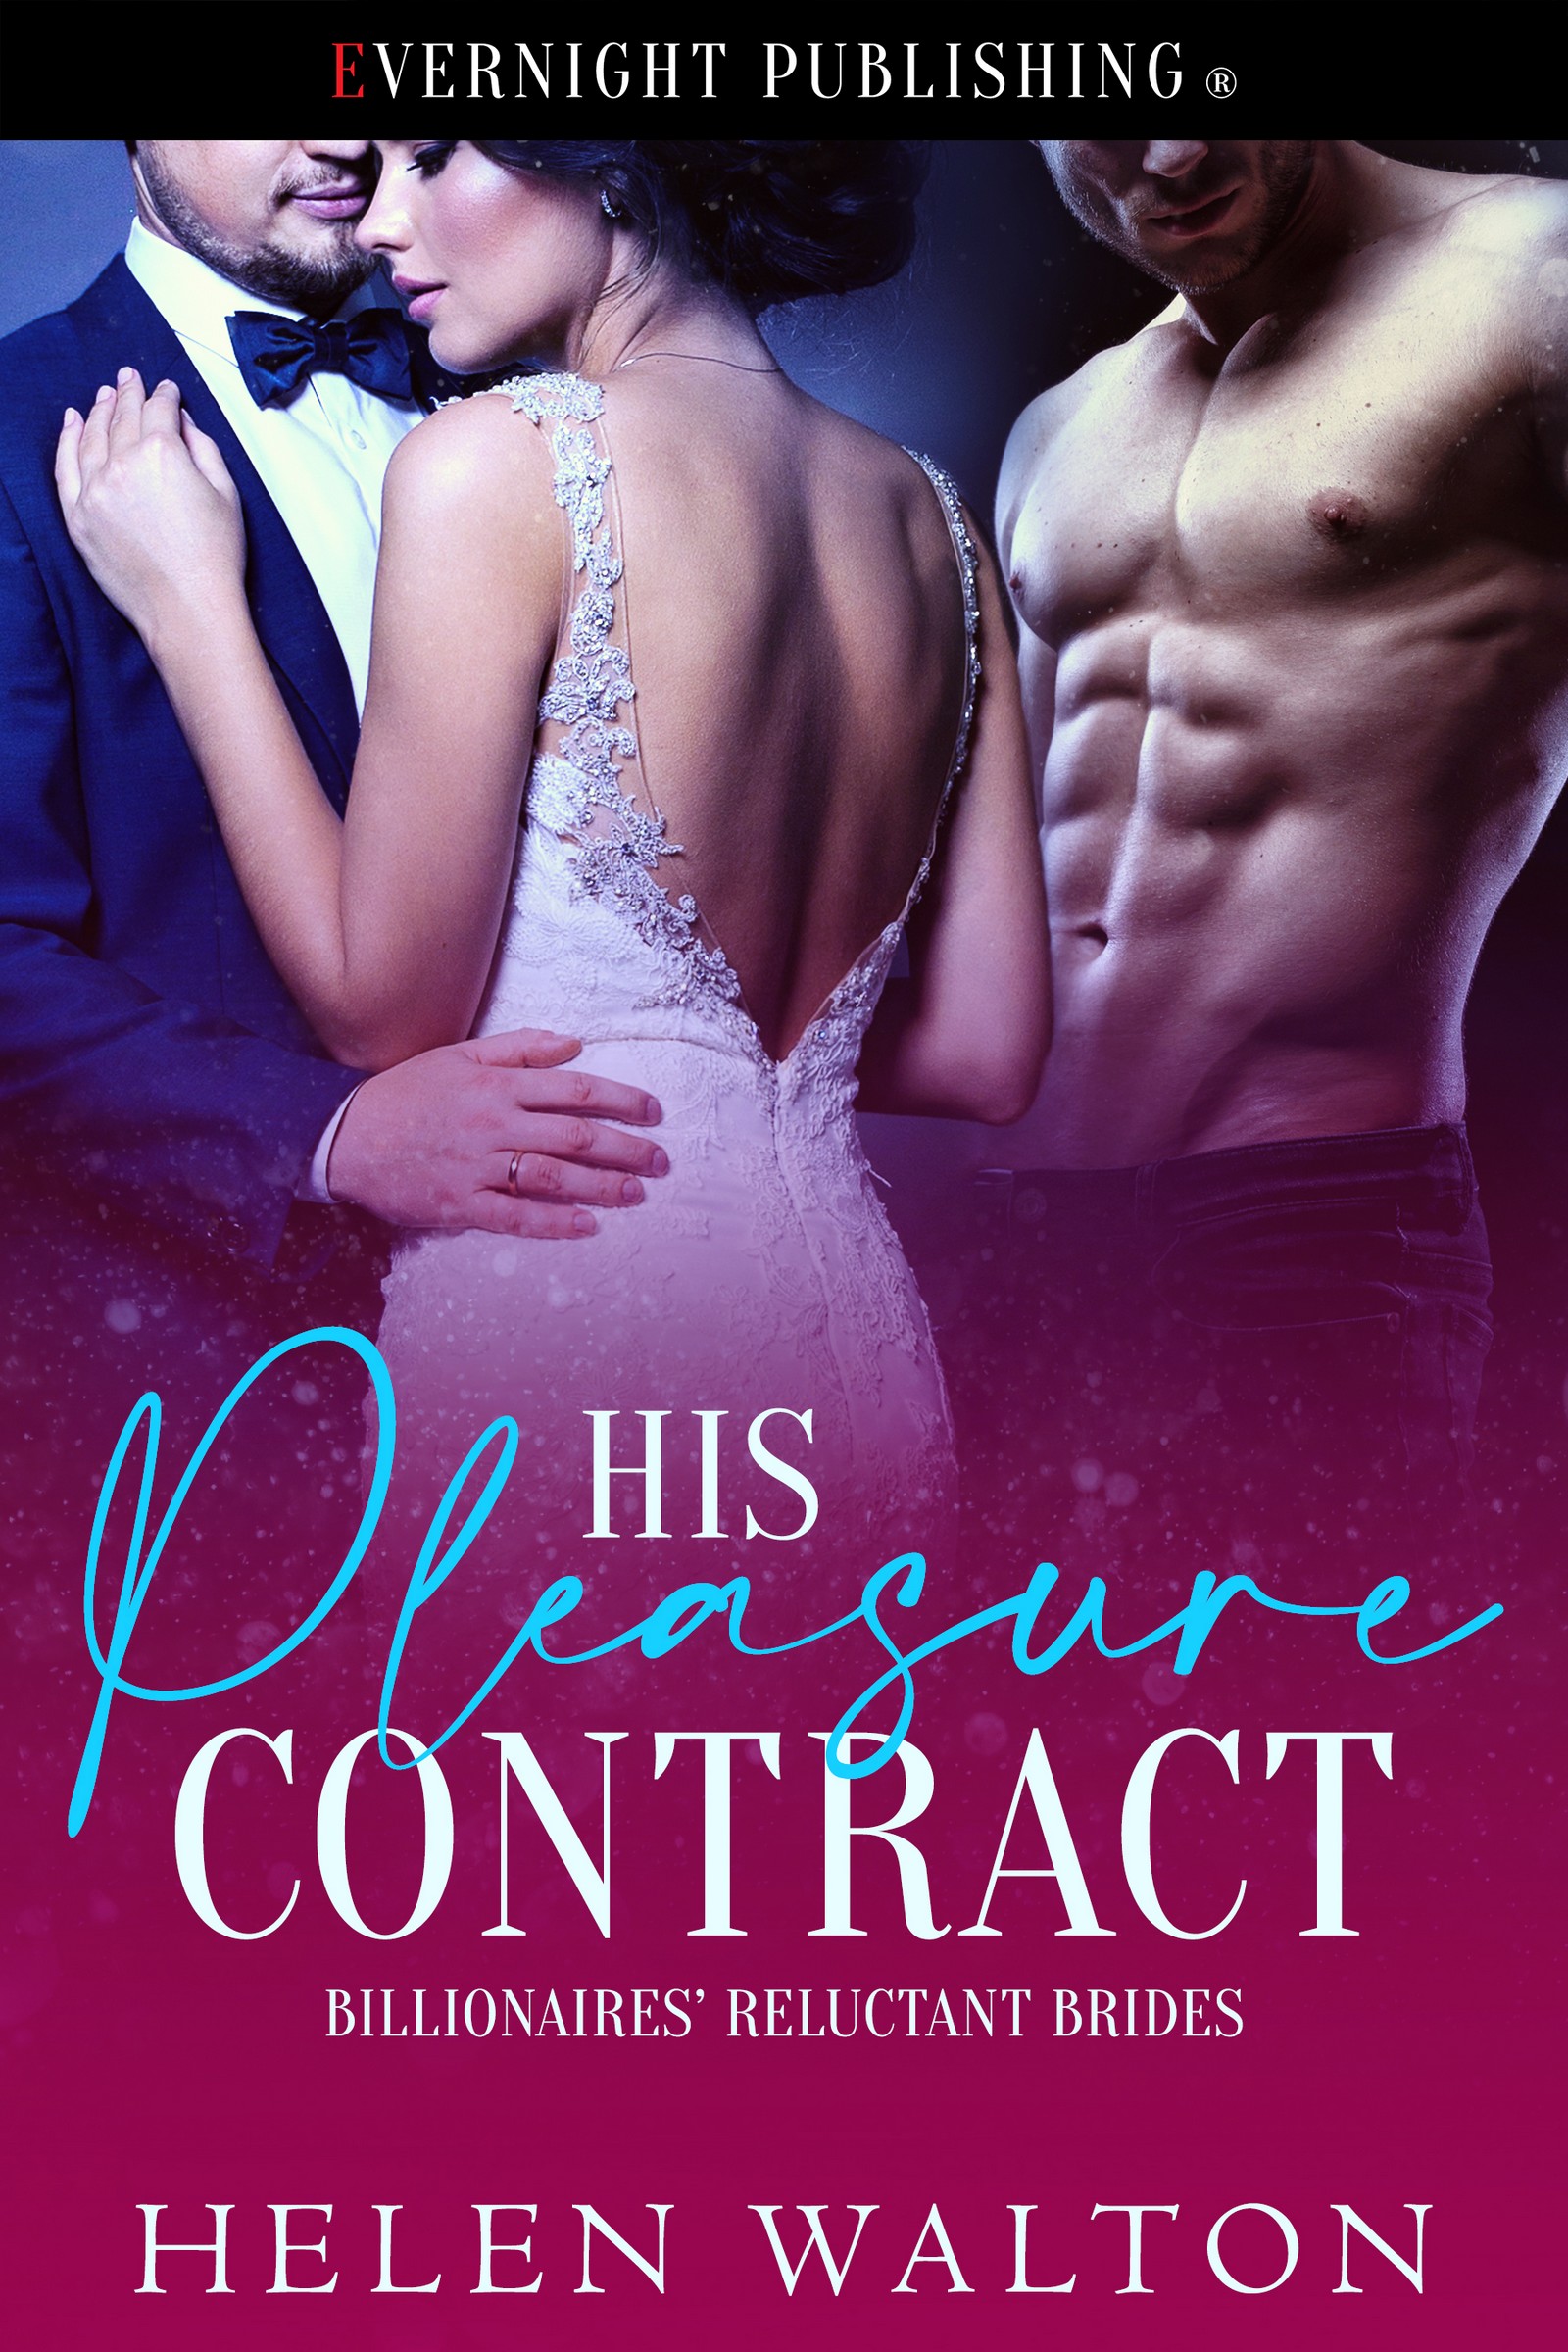 His Pleasure Contract by Helen Walton pic